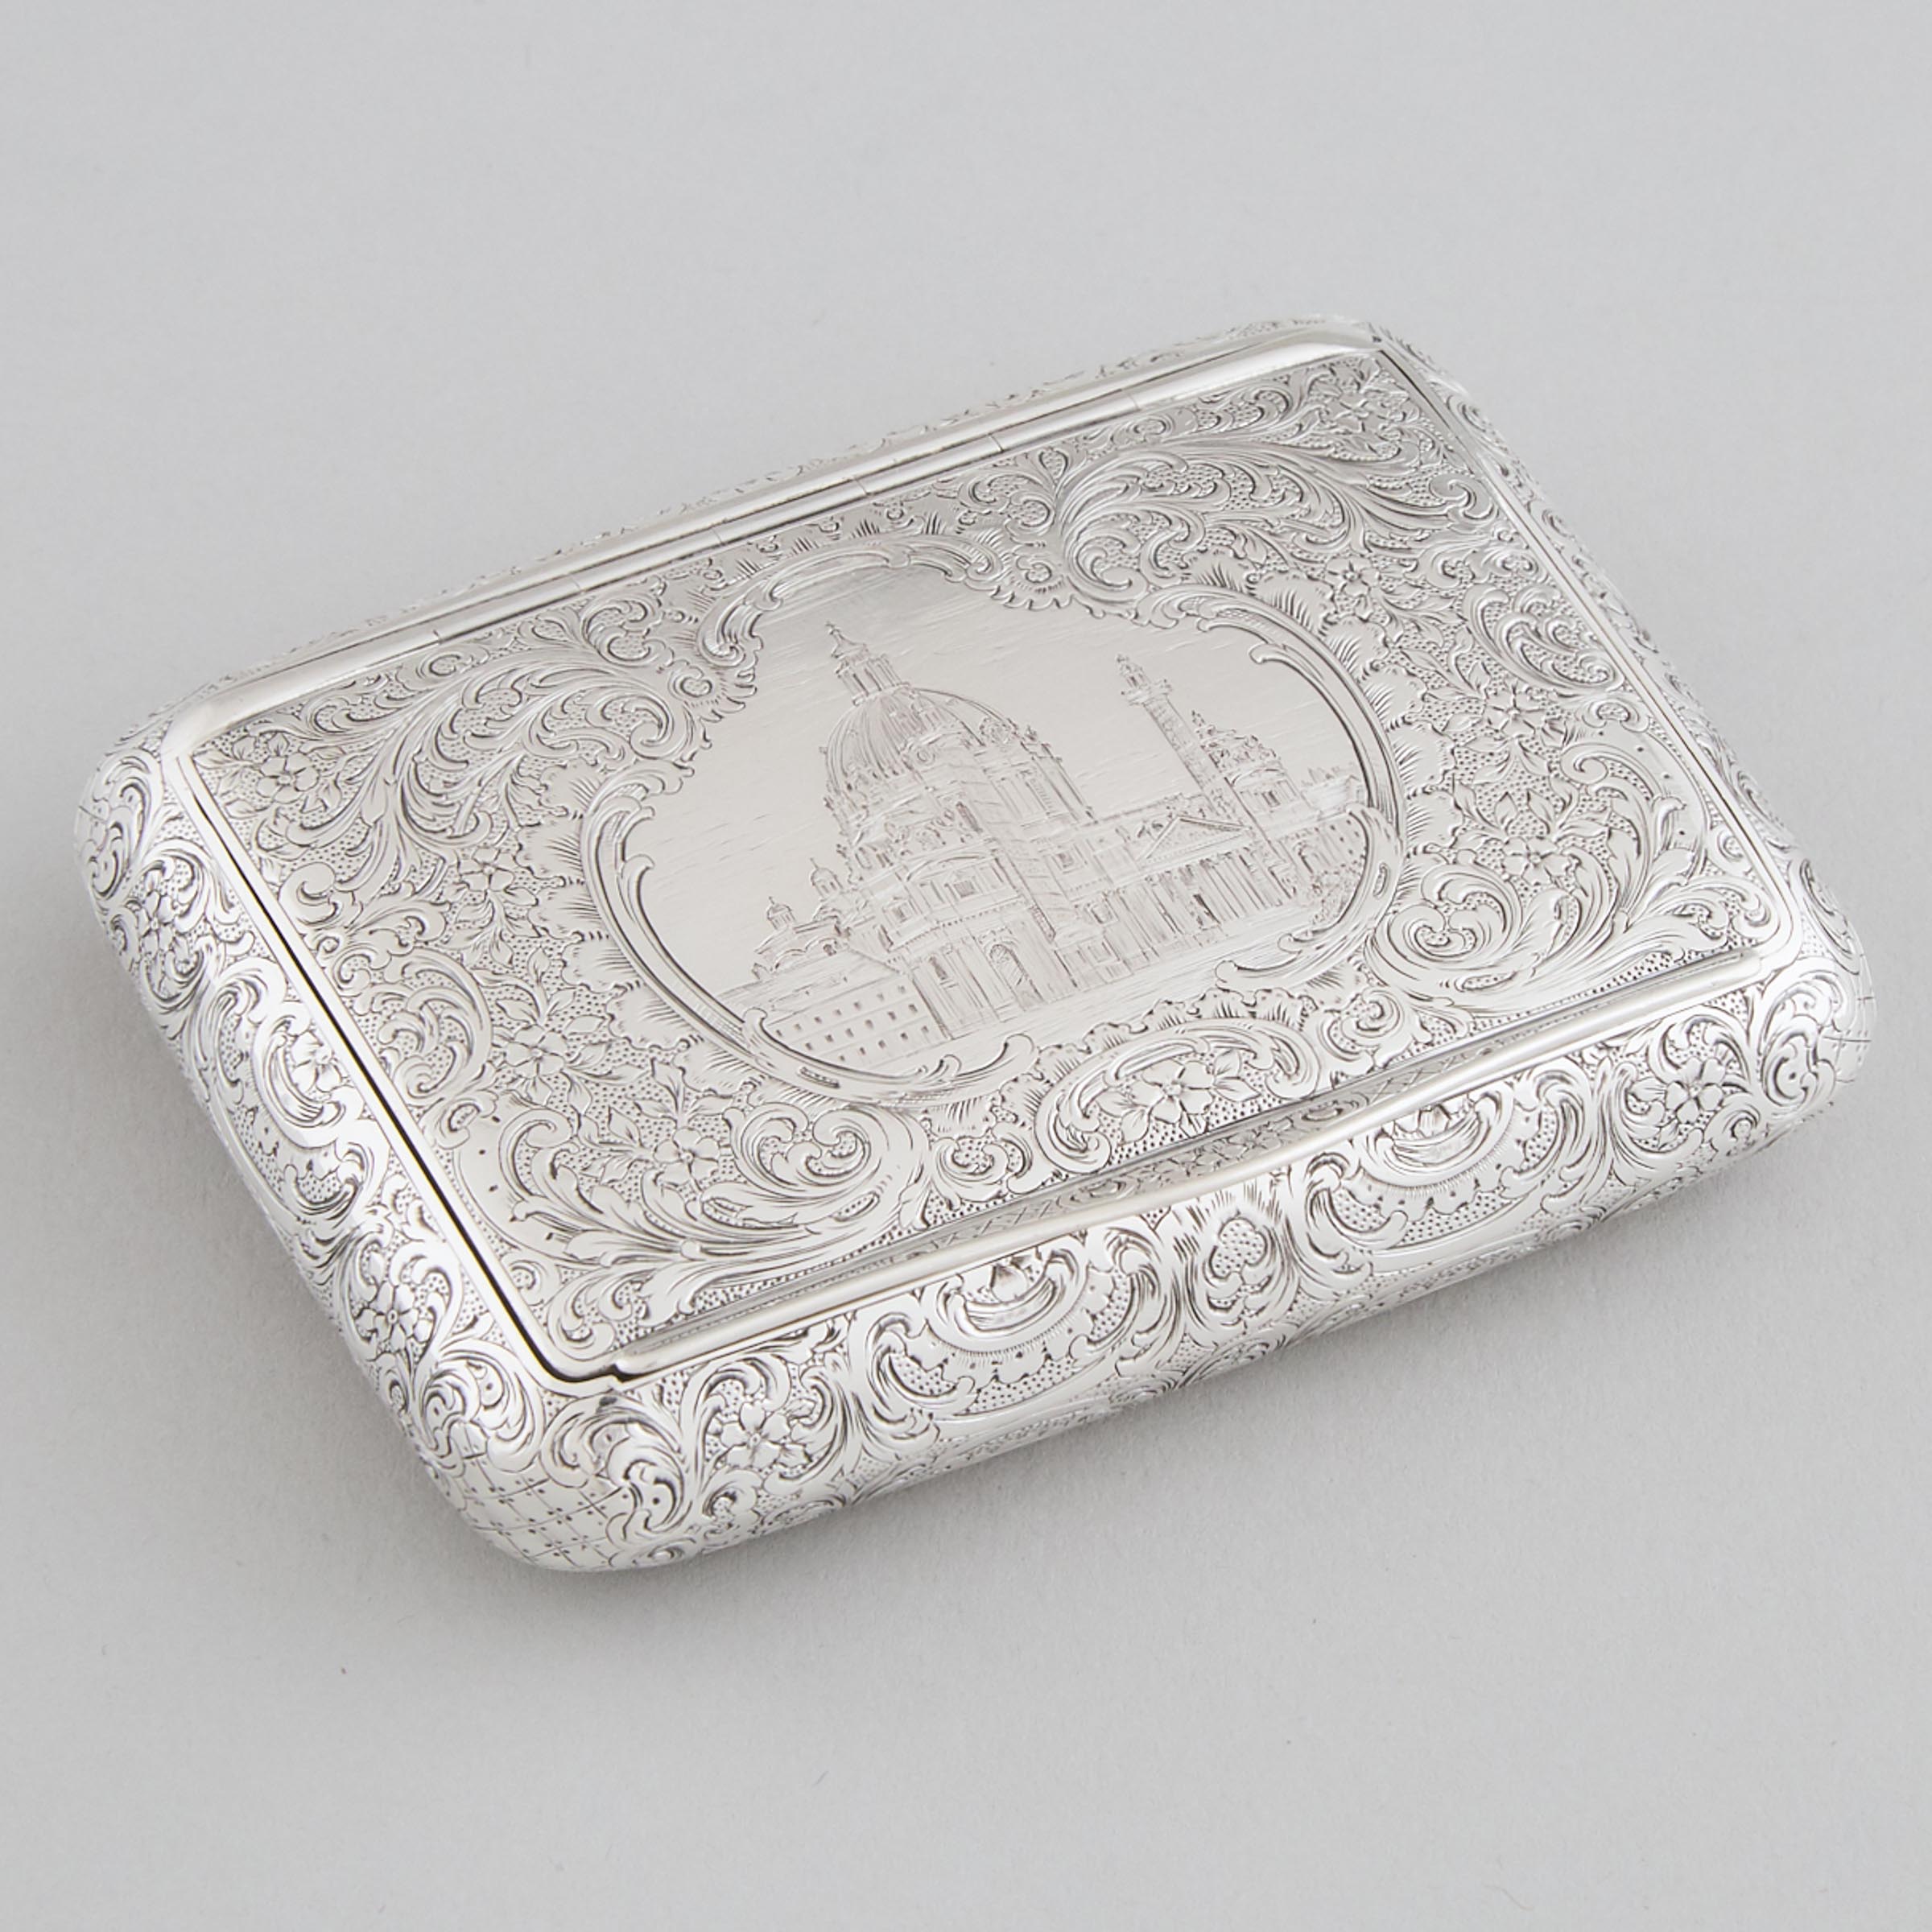 Austro-Hungarian Silver Oblong Snuff Box, Vienna, late 19th century